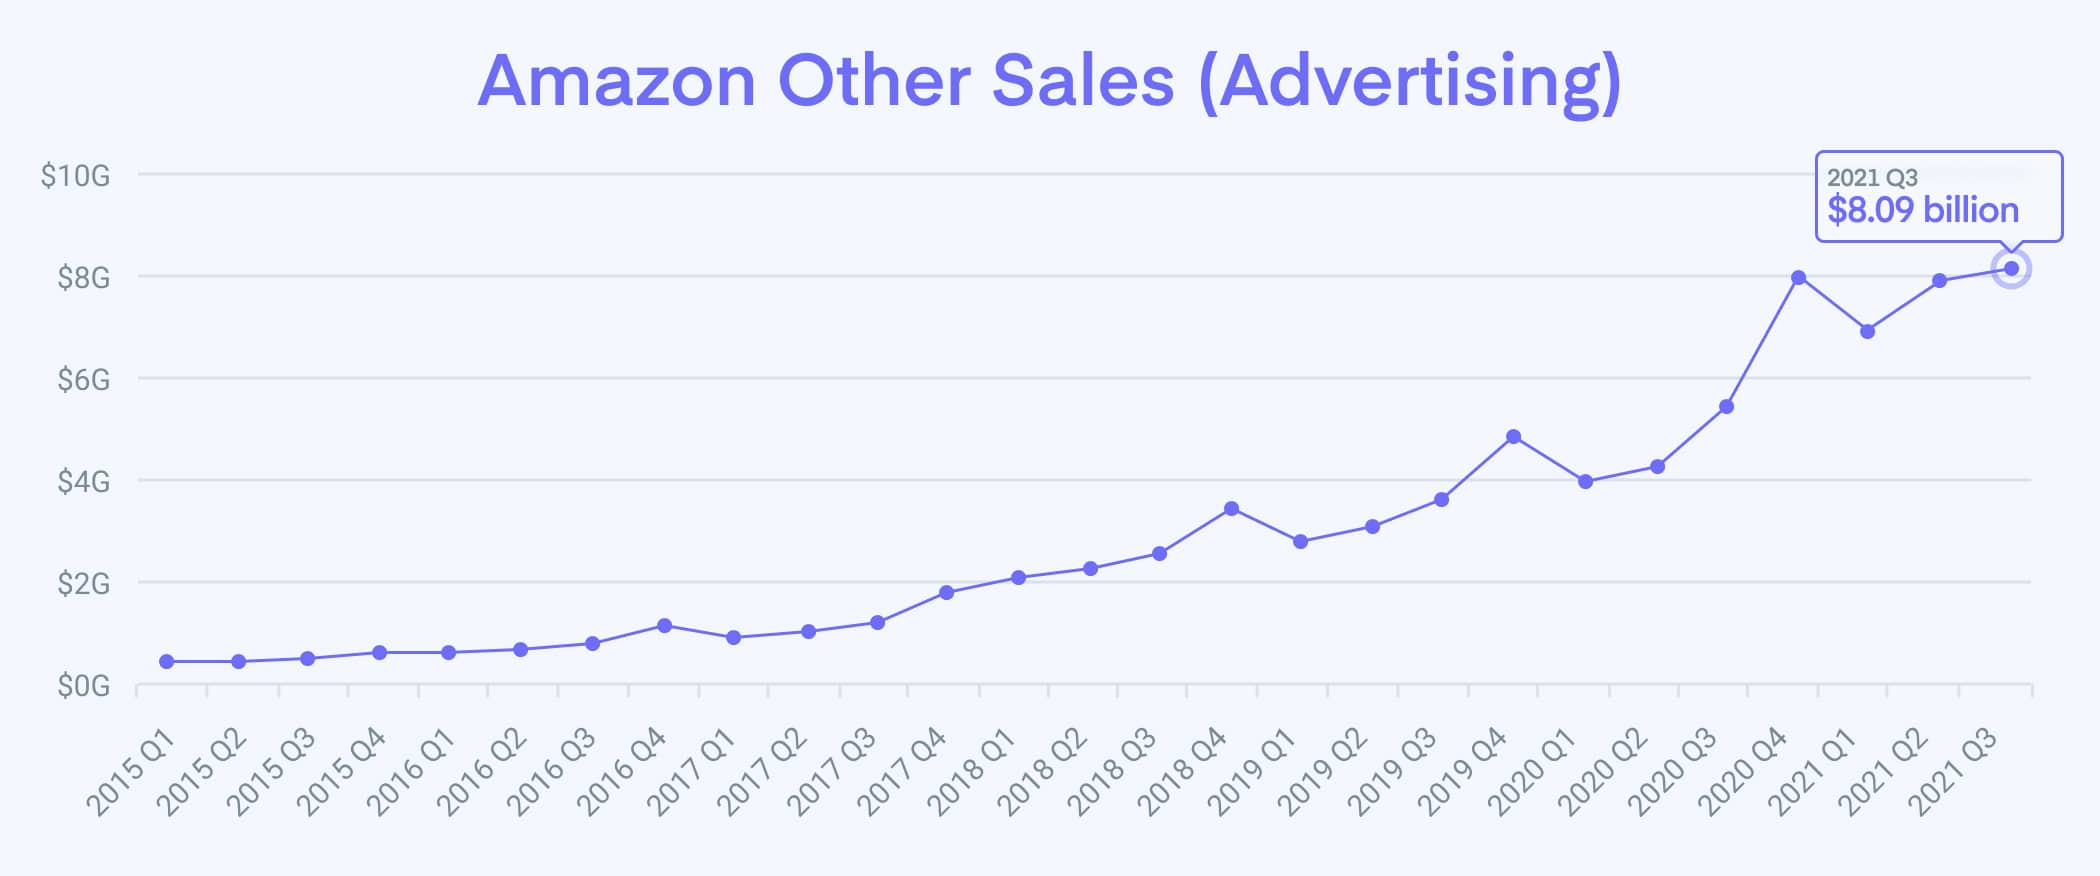 Amazon Other Sales